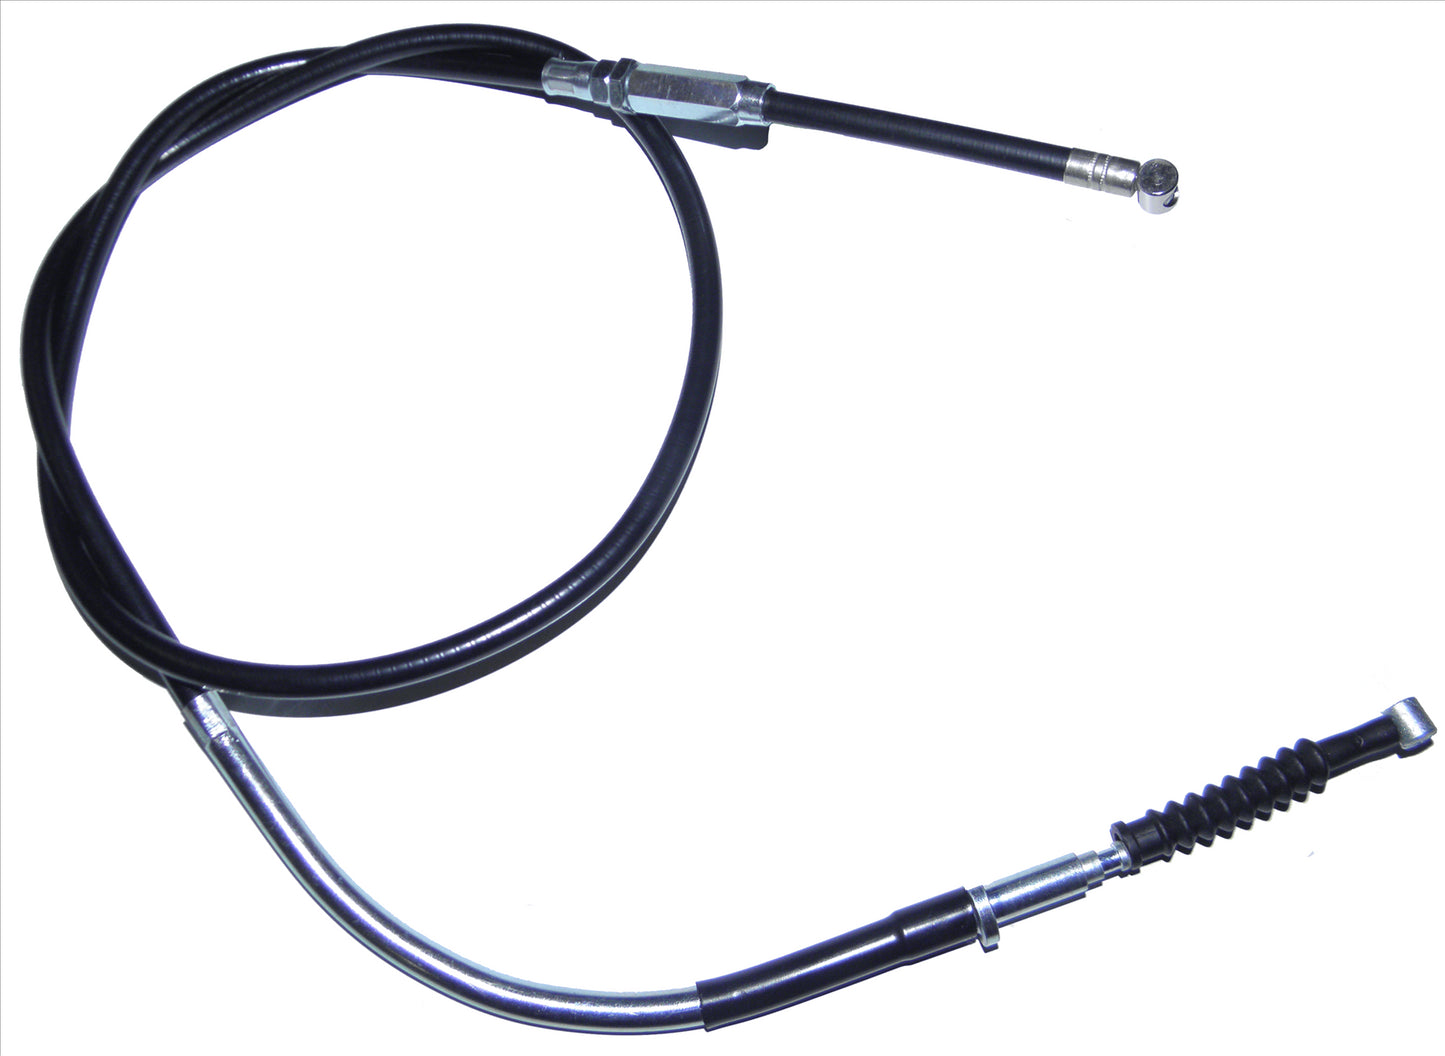 Apico Black Clutch Cable For Kawasaki KX 500 1990-2004